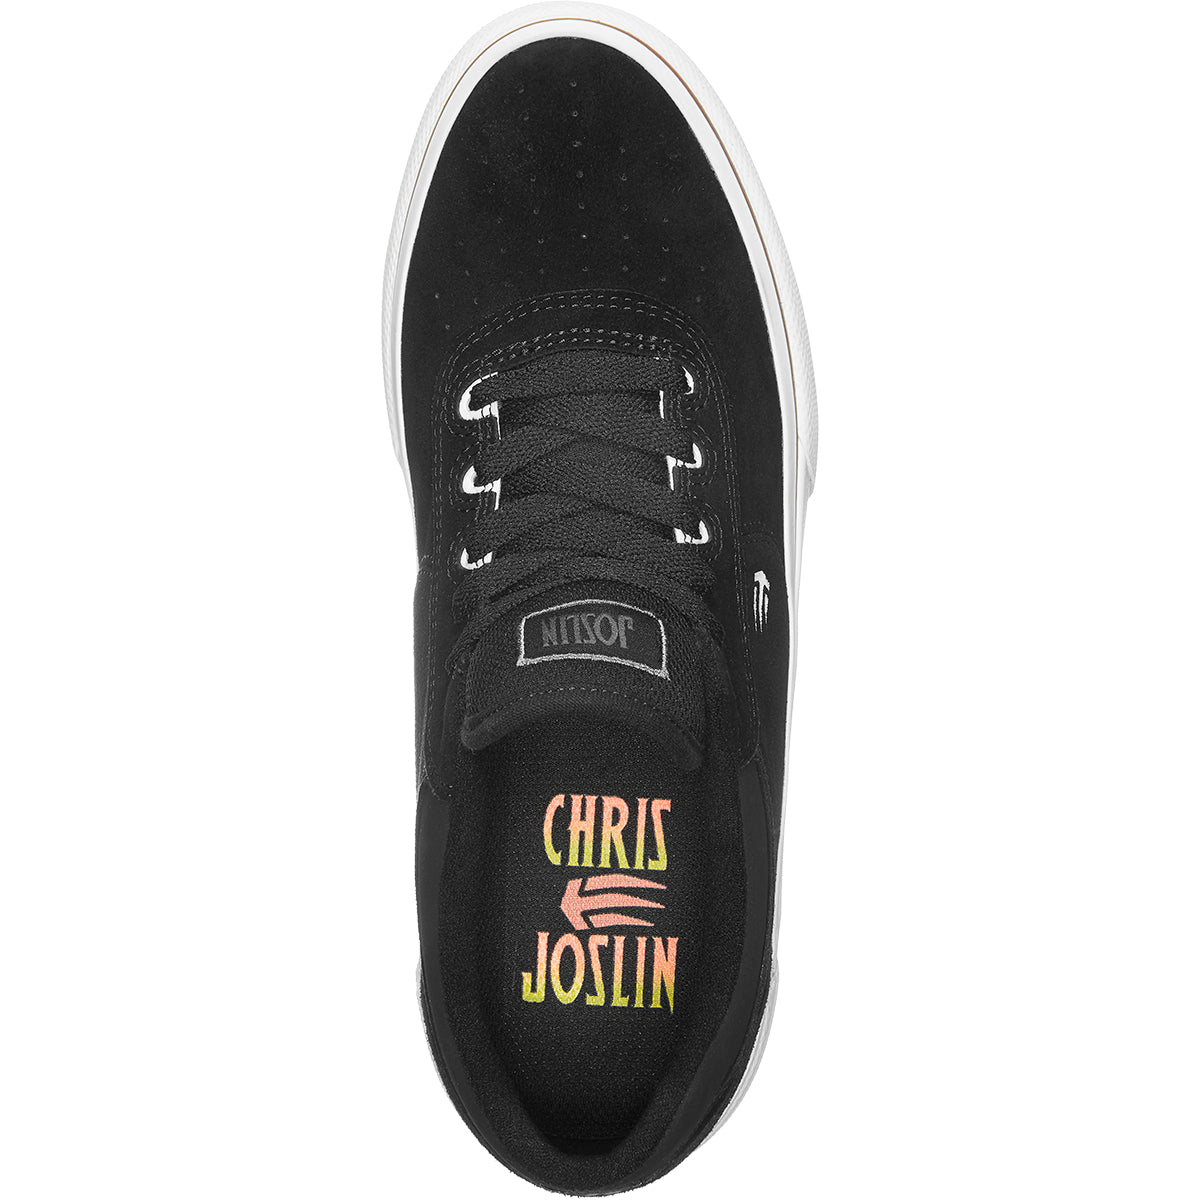 Black Chris Joslin Vulc Etnie Skateboarding Shoe Top